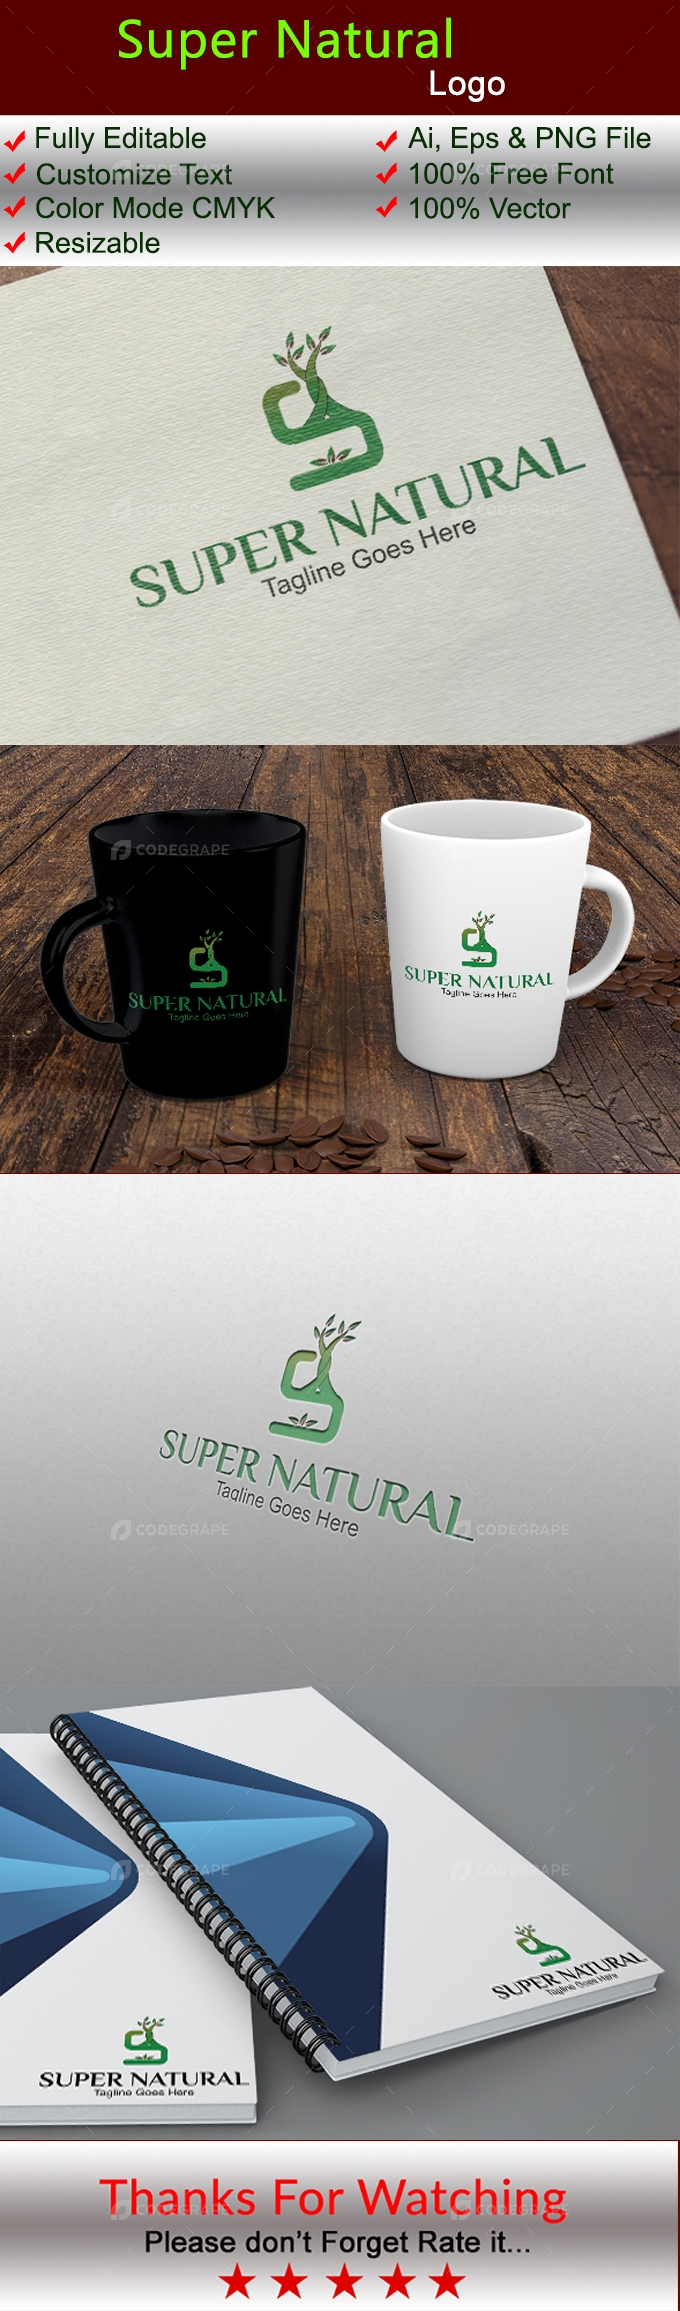 Super Natural Logo